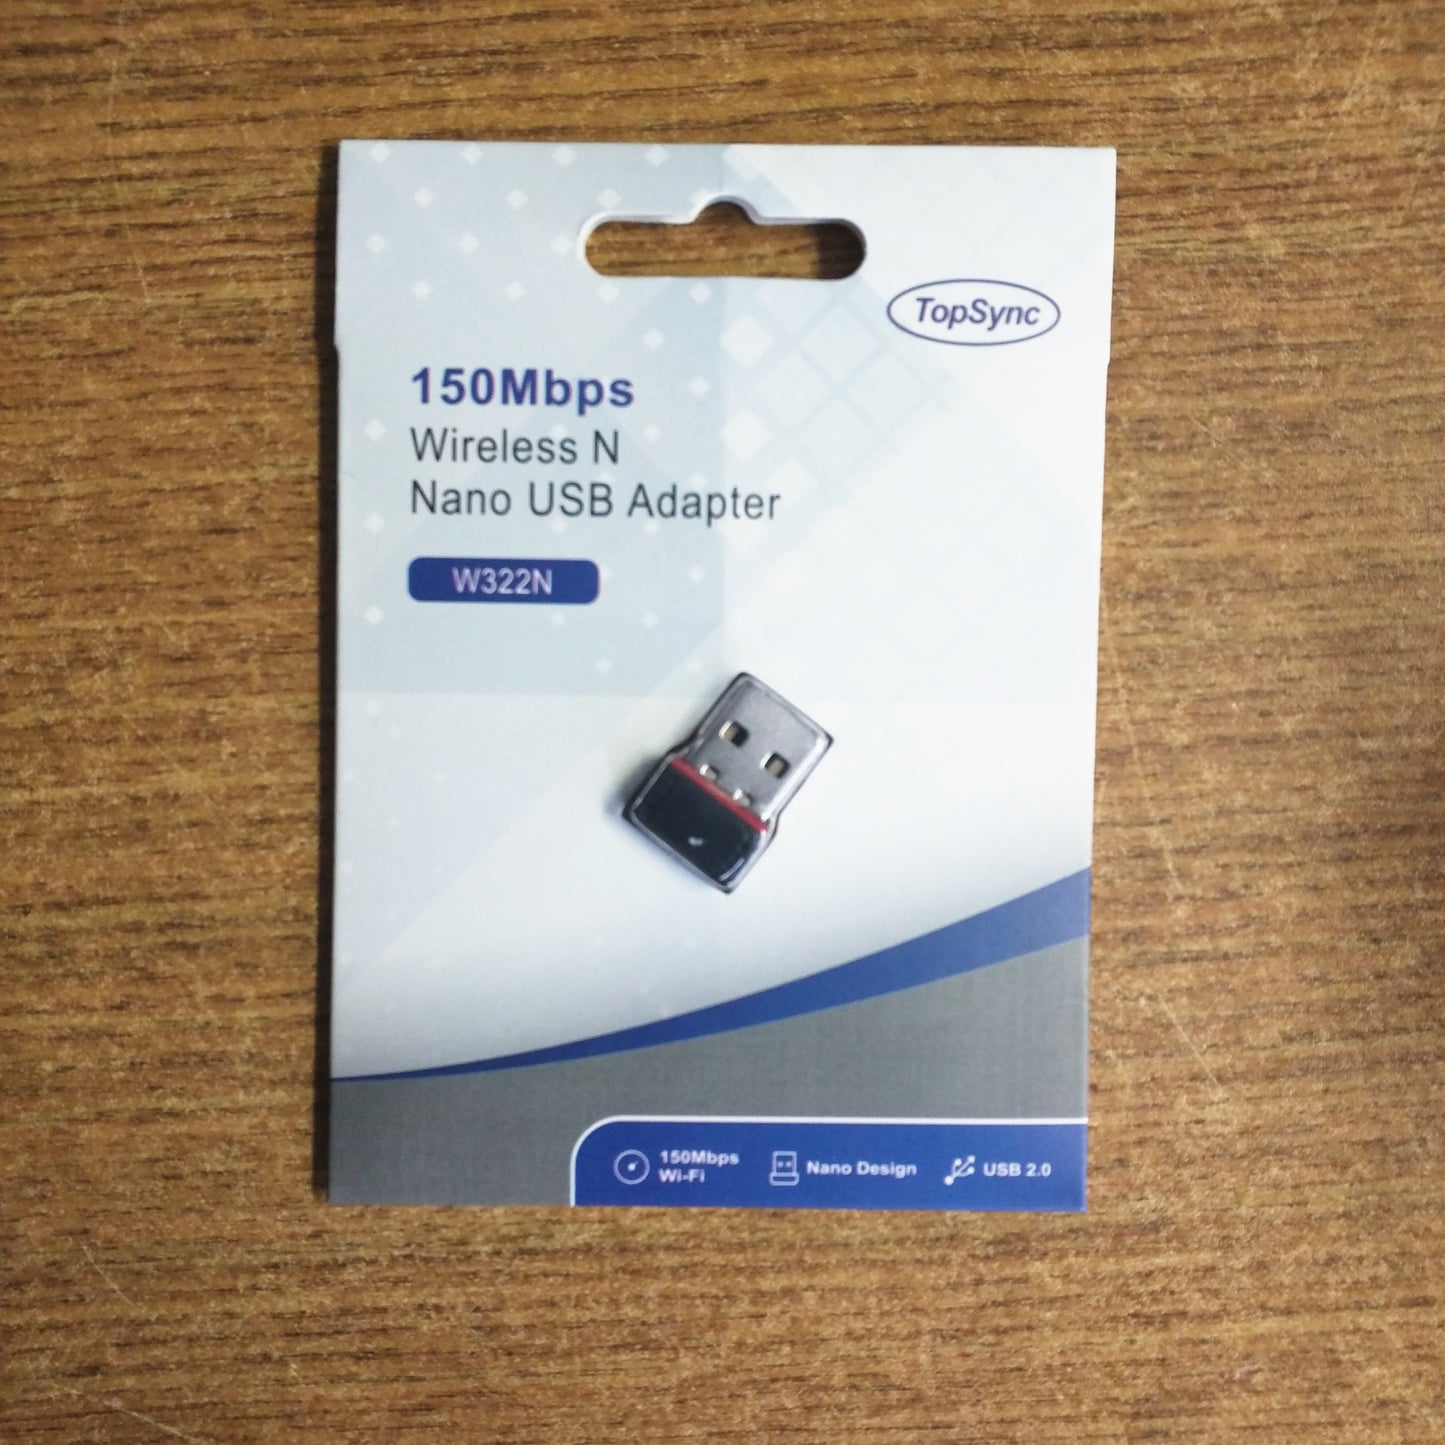 TopSync 150 Mbps Wireless N Nano USB Adapter